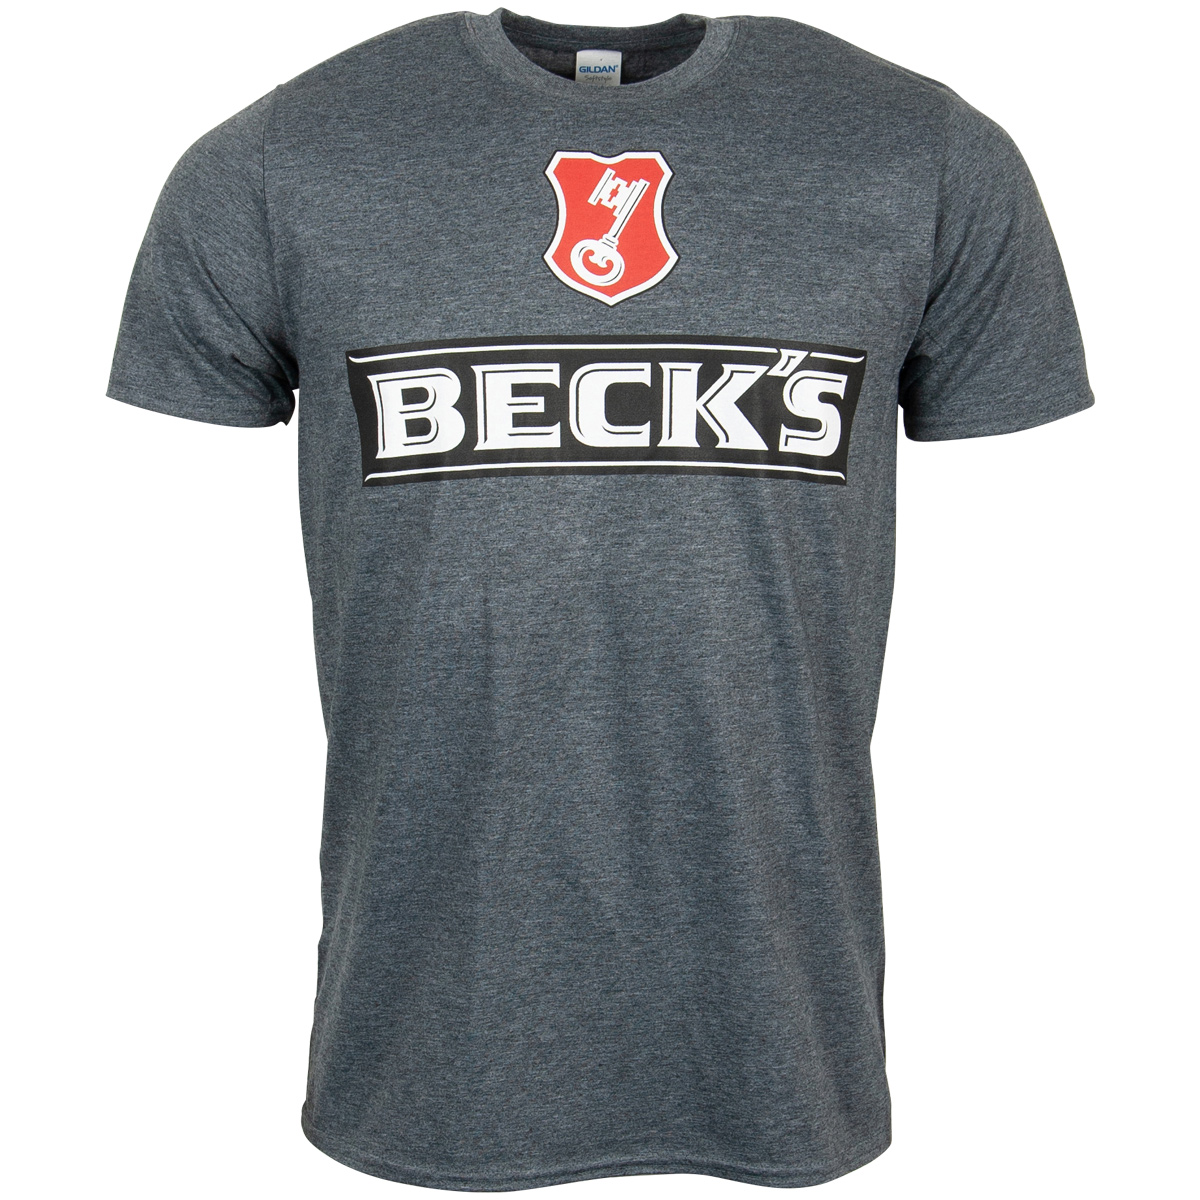 Beck's - T-Shirt Logo - grau